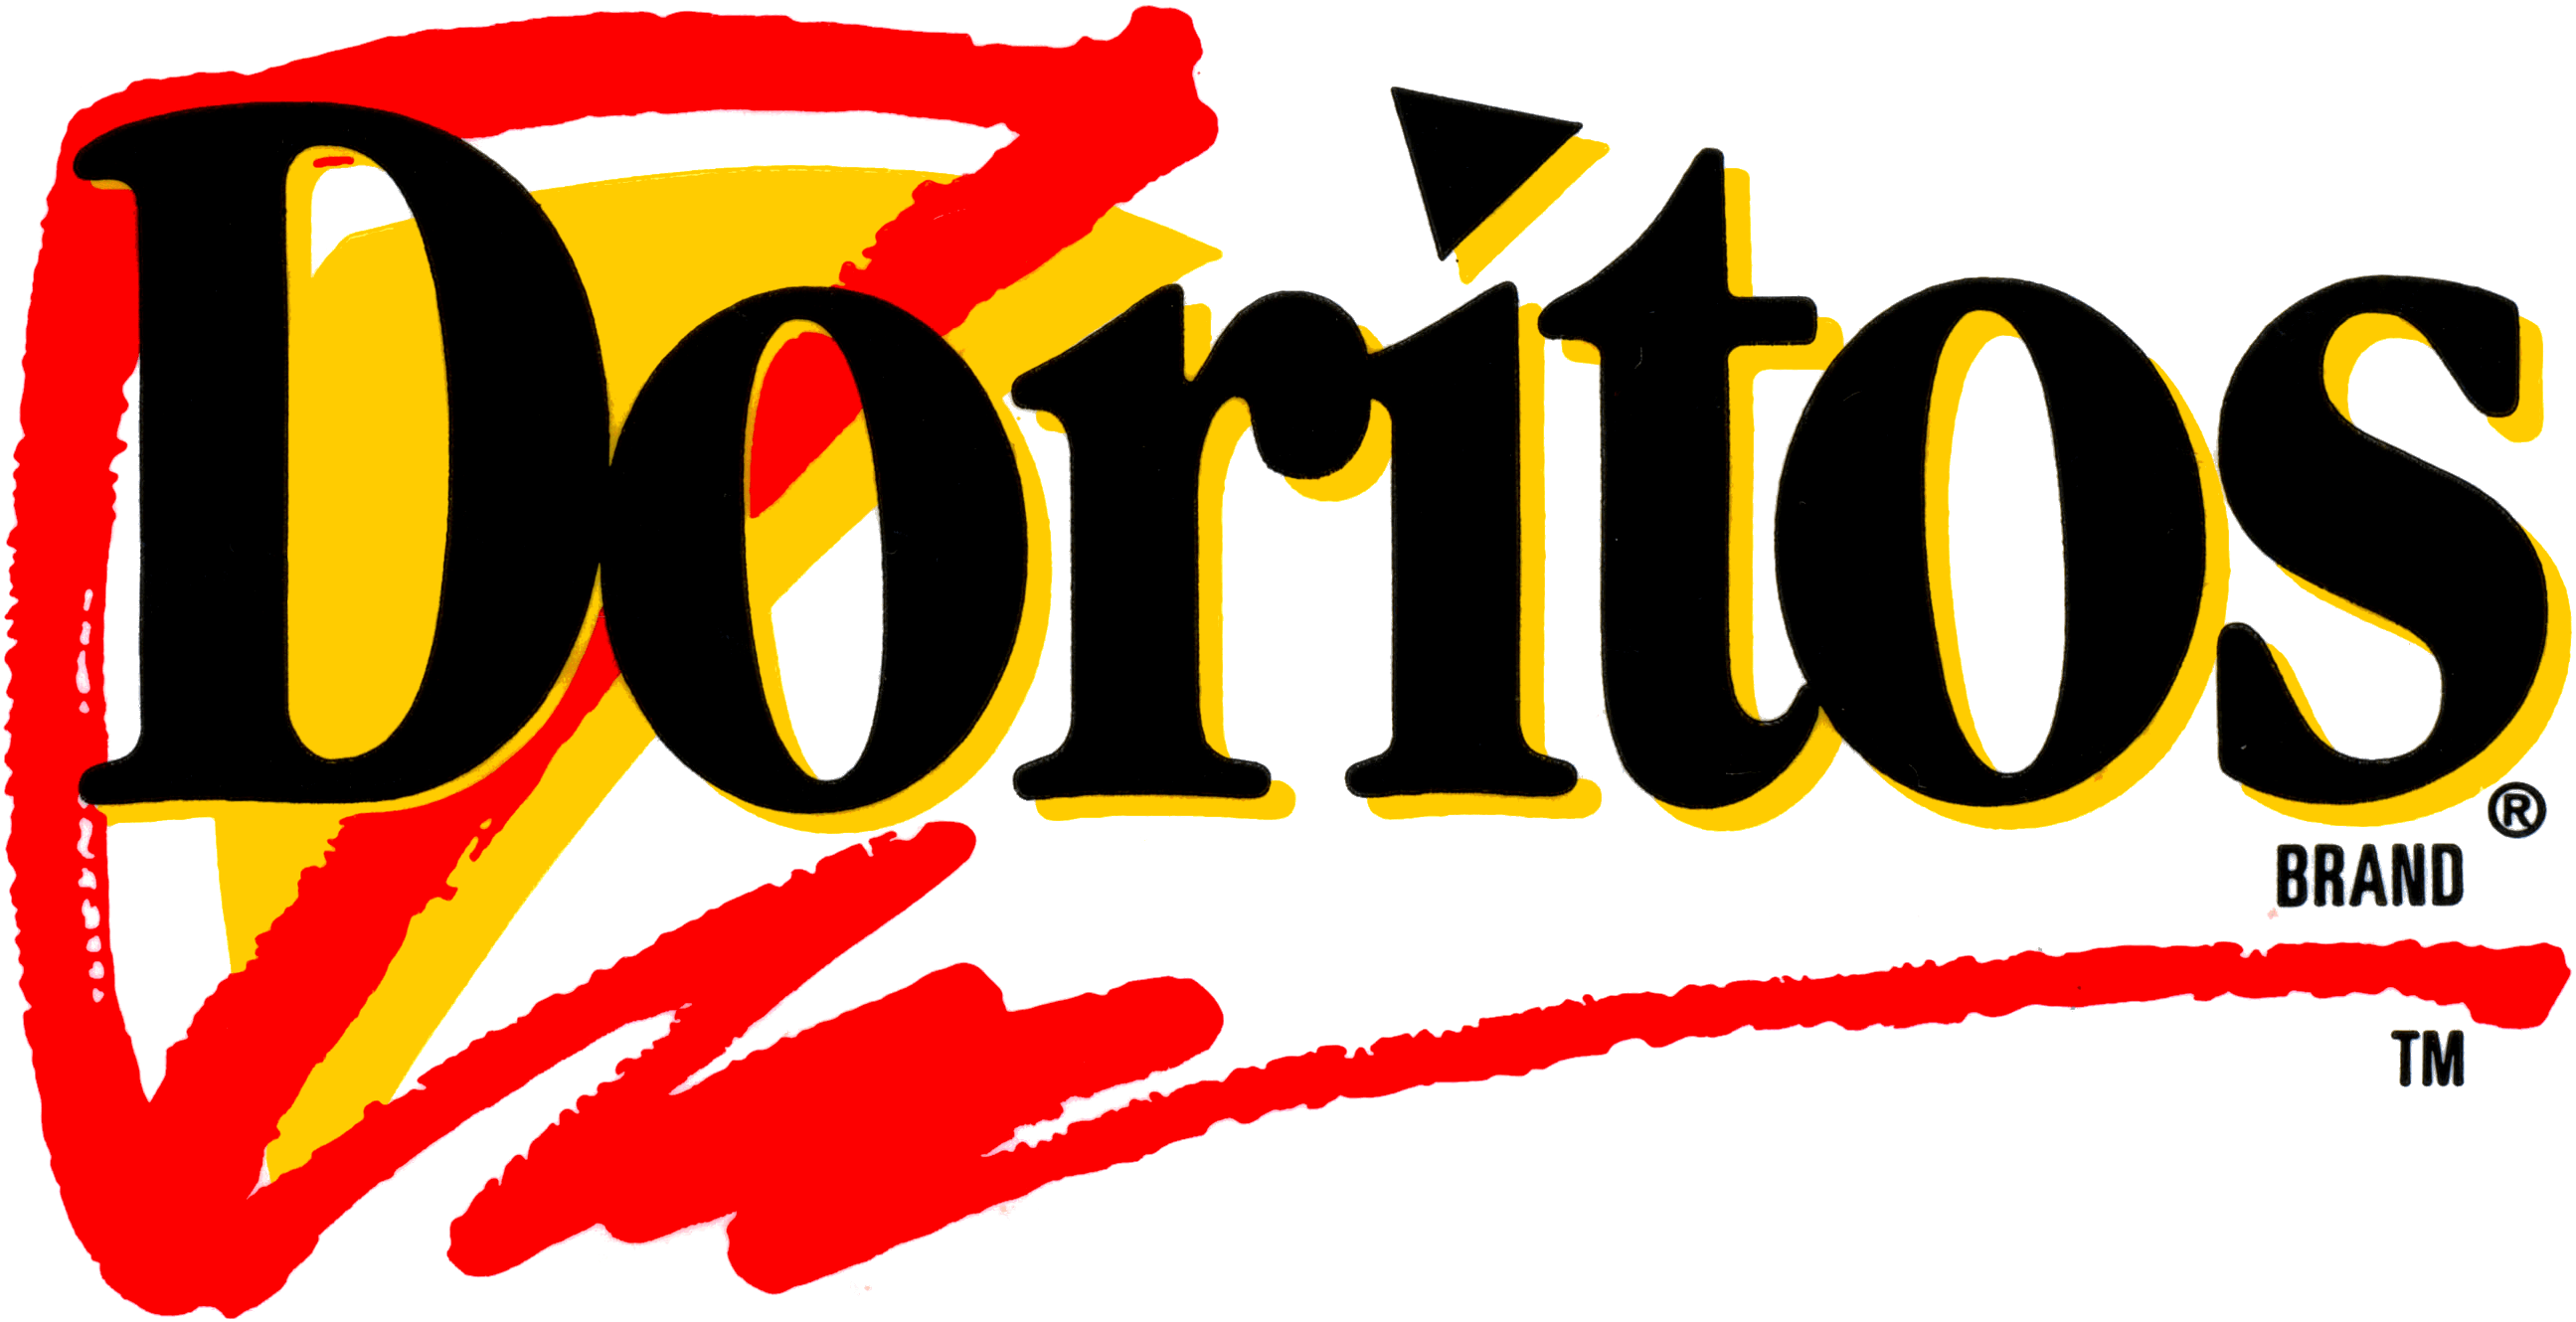 Doritos Logo - Image - Doritos logo 1997.png | Logofanonpedia | FANDOM powered by Wikia